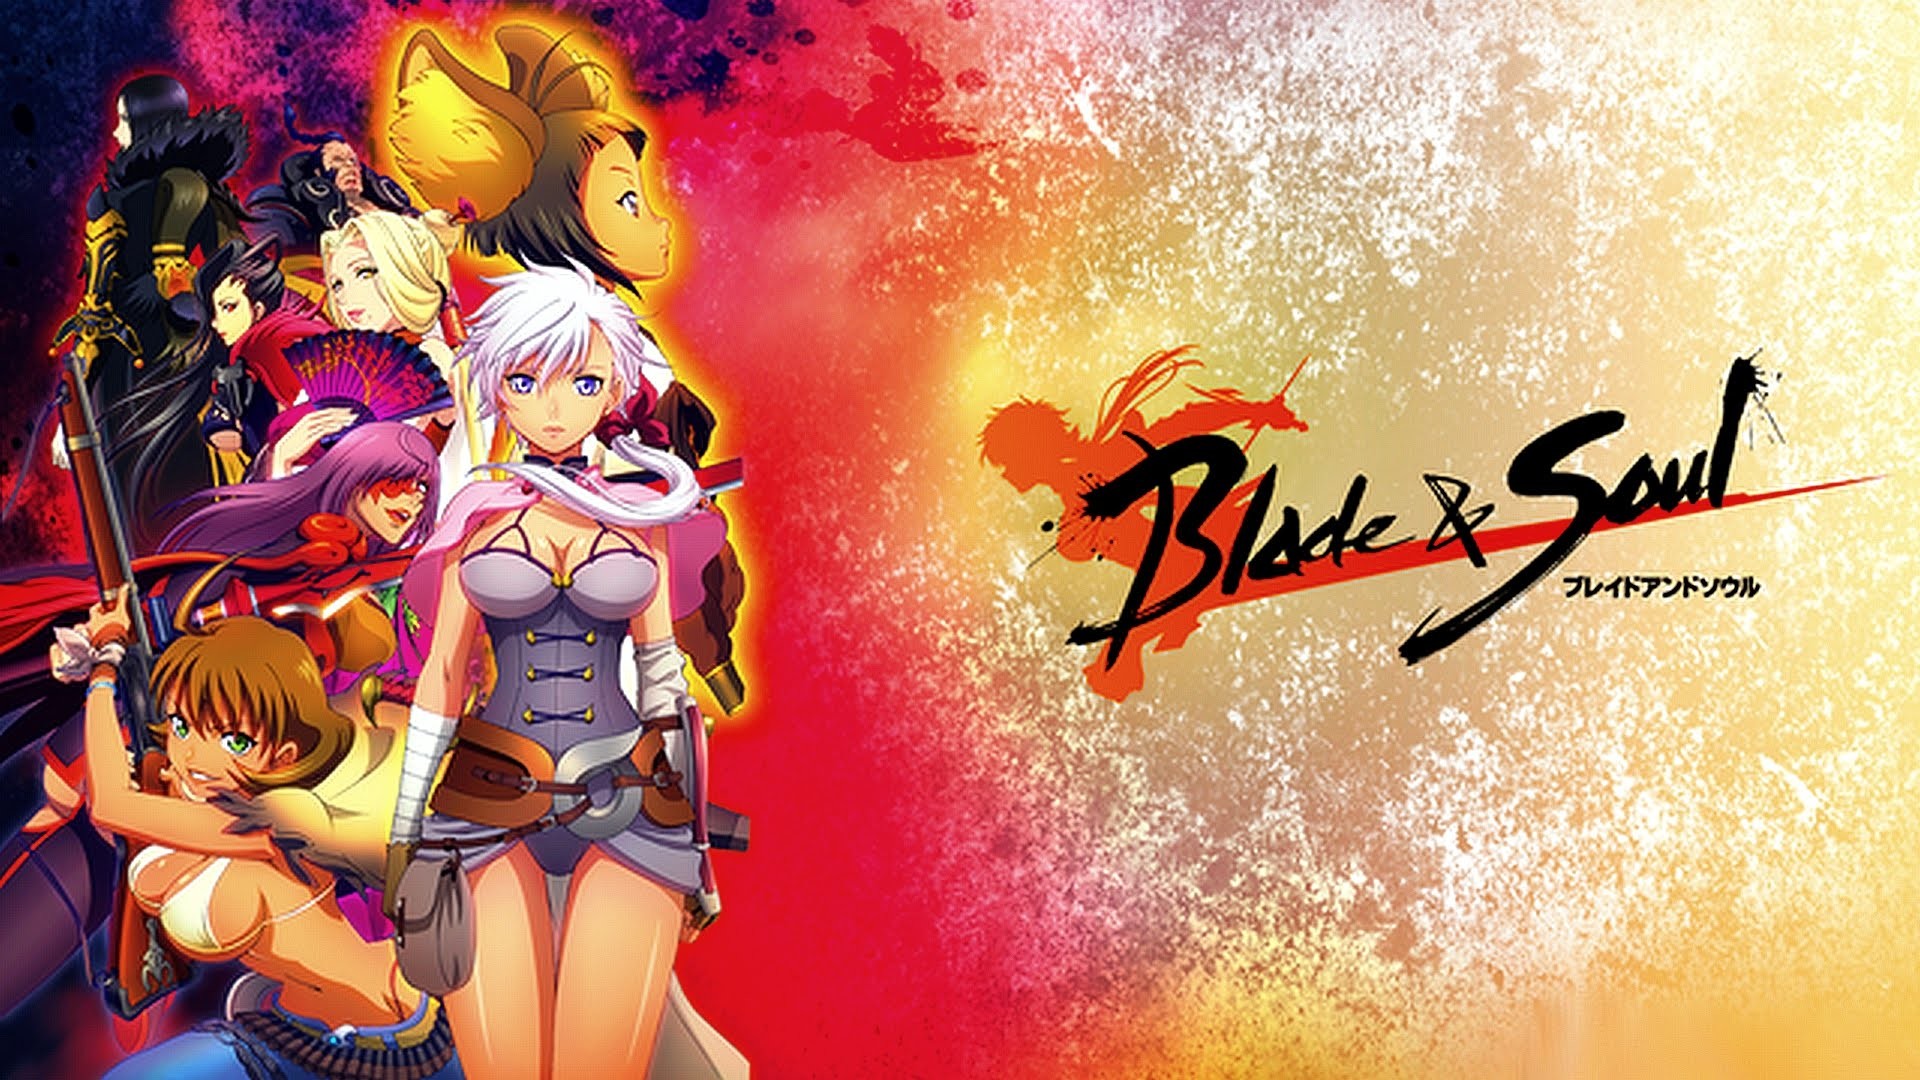 Blade & Soul Anime Full Hd 1080p A 60 Frames - Blade And Soul Wallpaper  Anime - 1920x1080 Wallpaper 